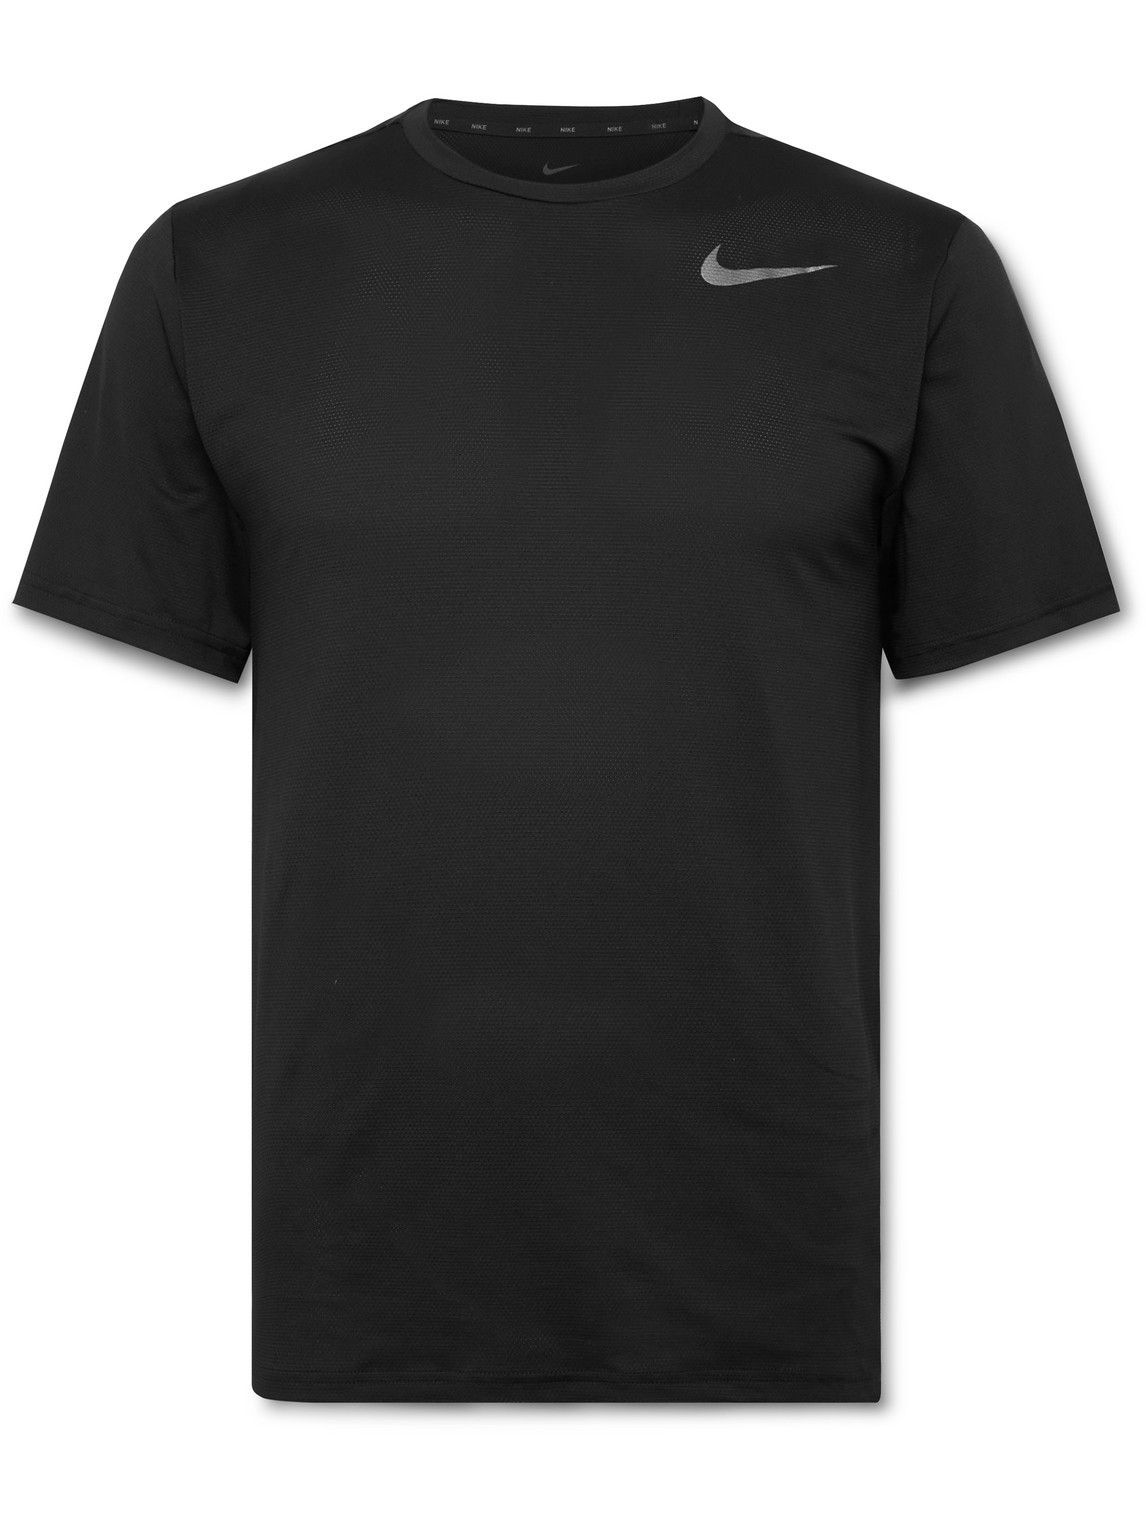 Nike Training - Utility Static Dri-FIT T-Shirt - Black Nike Training